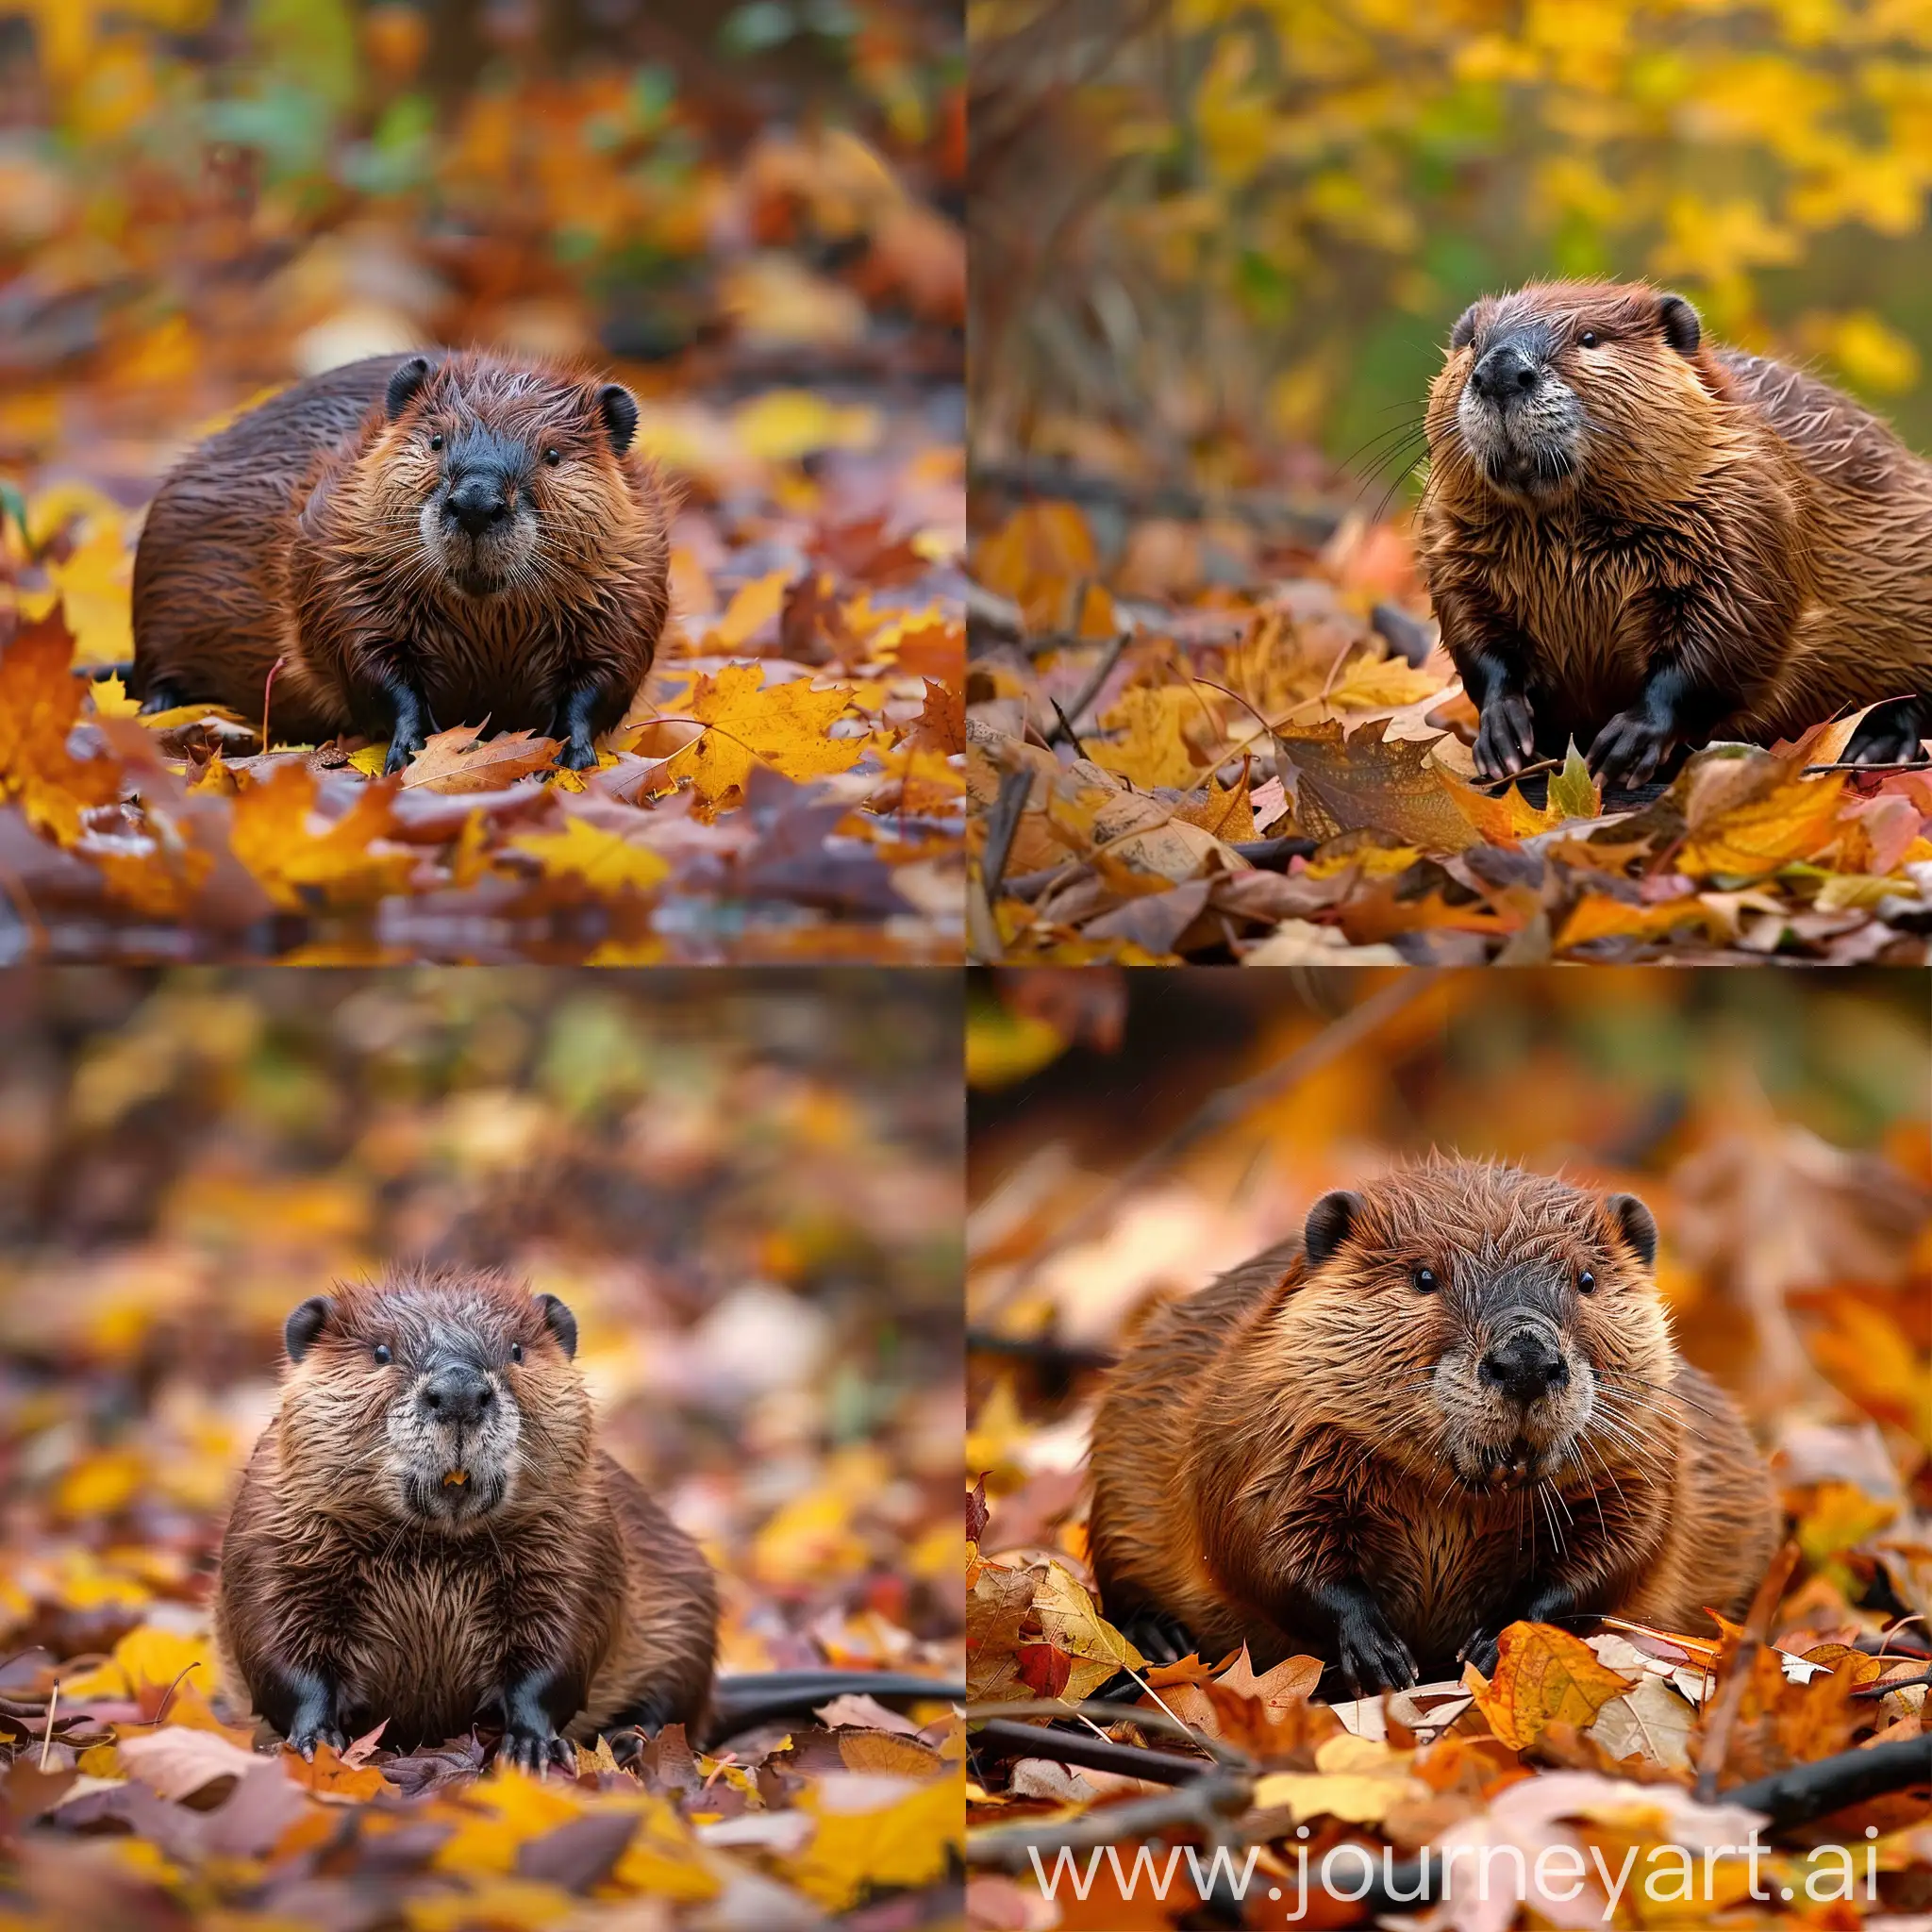 beaver on autumn leaves